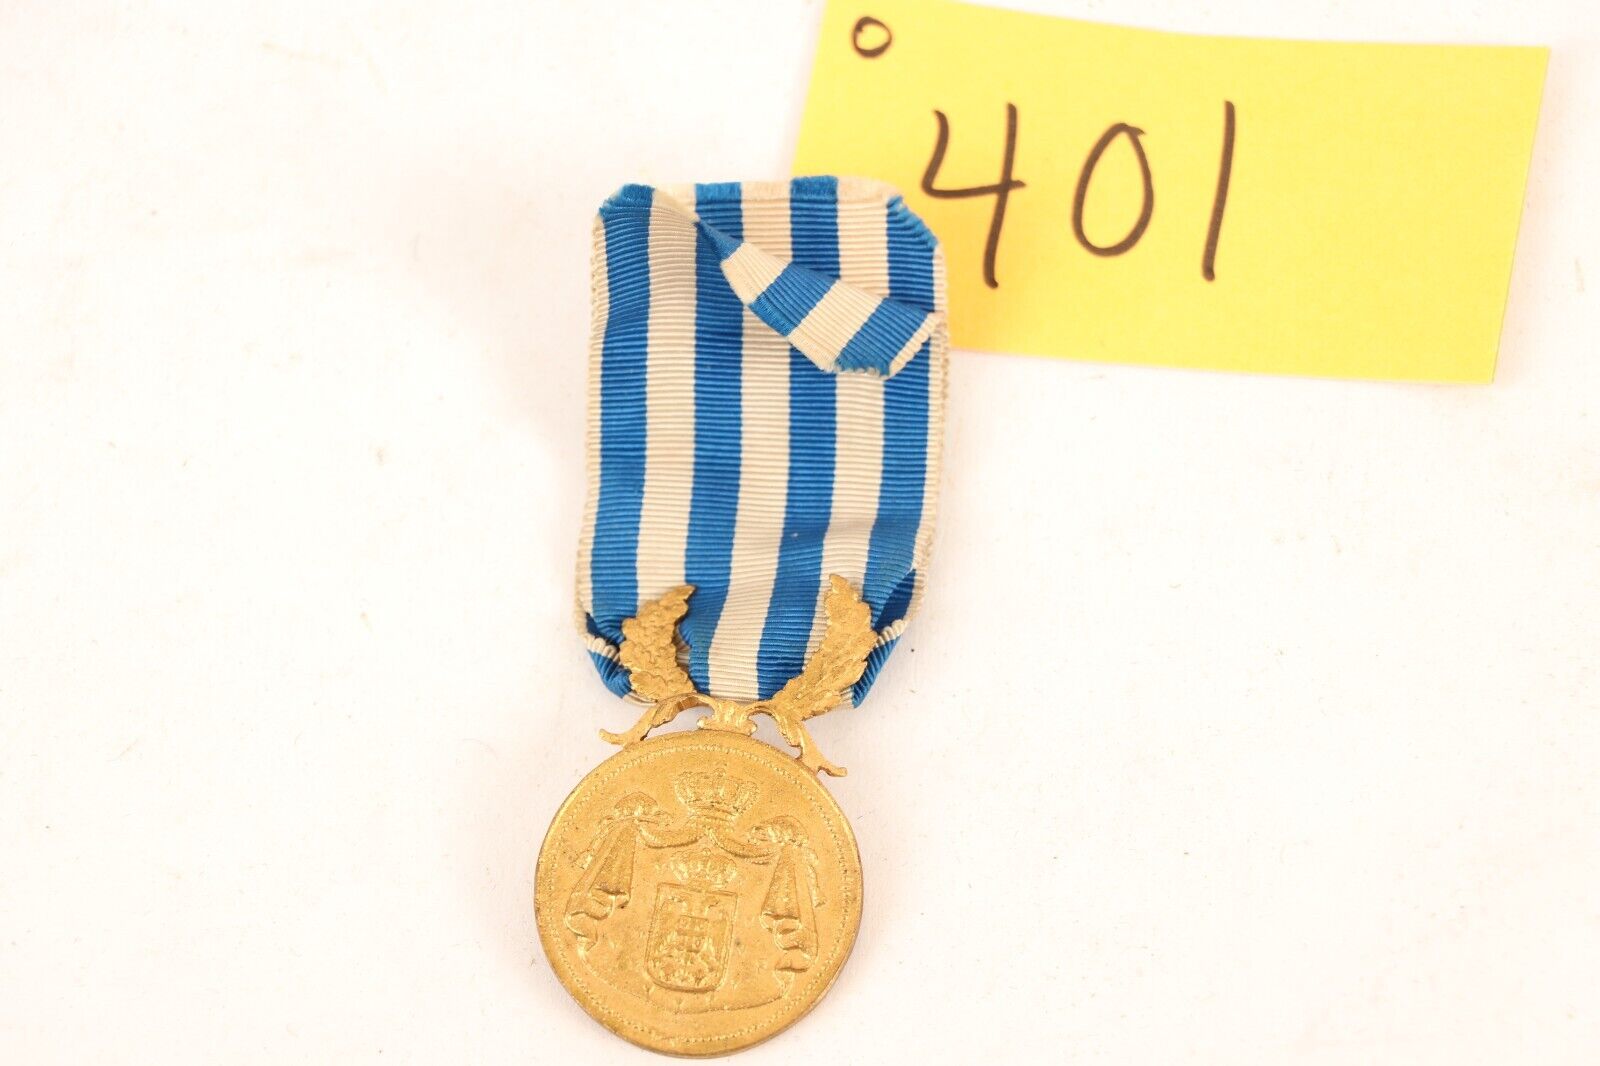 Siberian Civil Medal of Merit